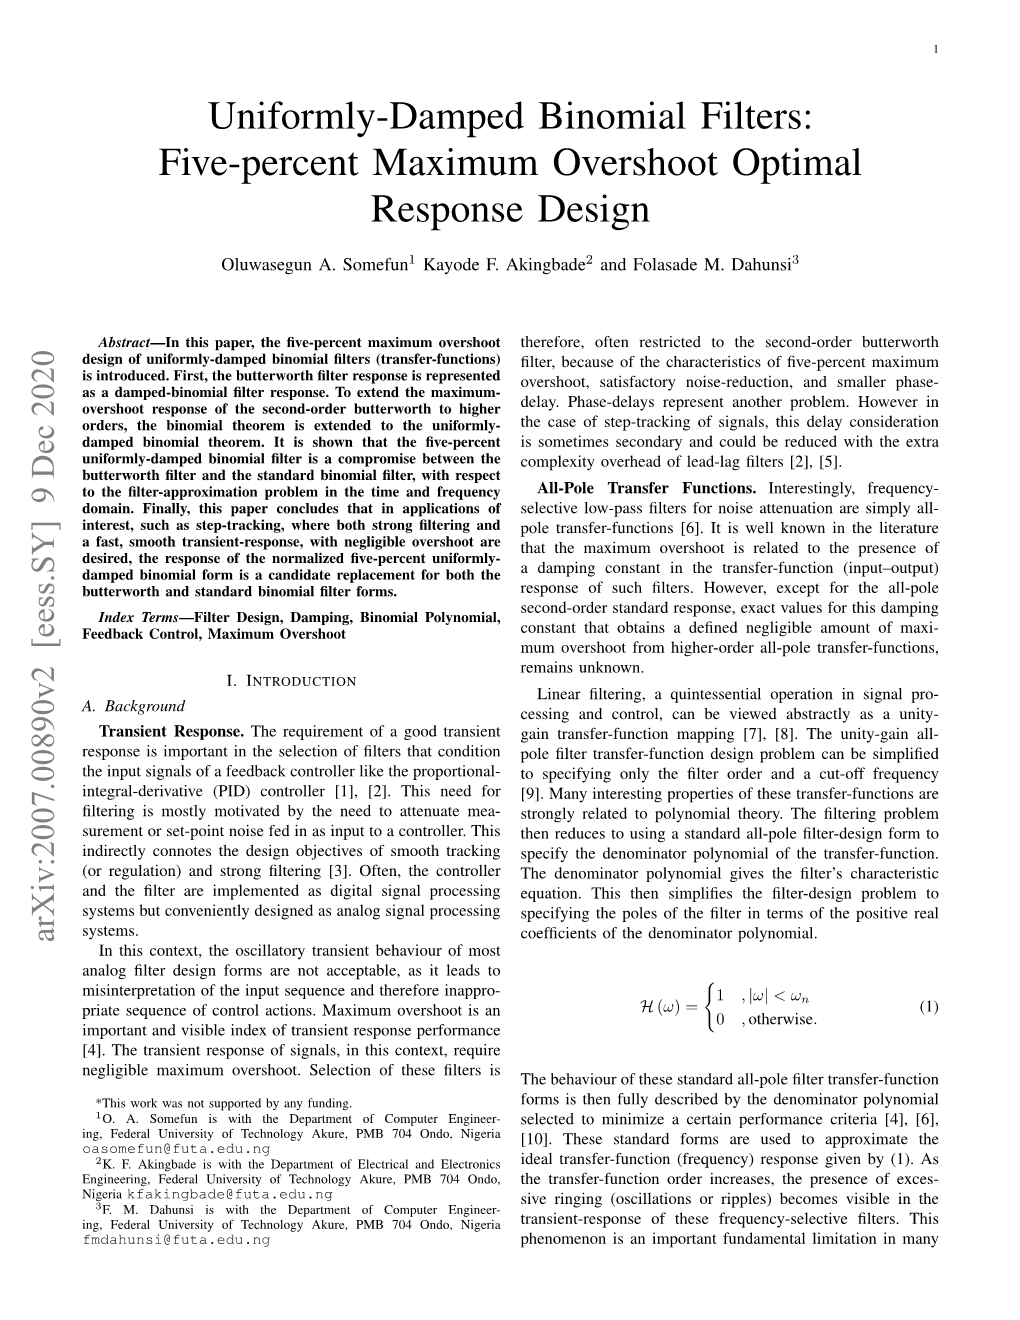 Uniformly-Damped Binomial Filters: Five-Percent Maximum Overshoot Optimal Response Design